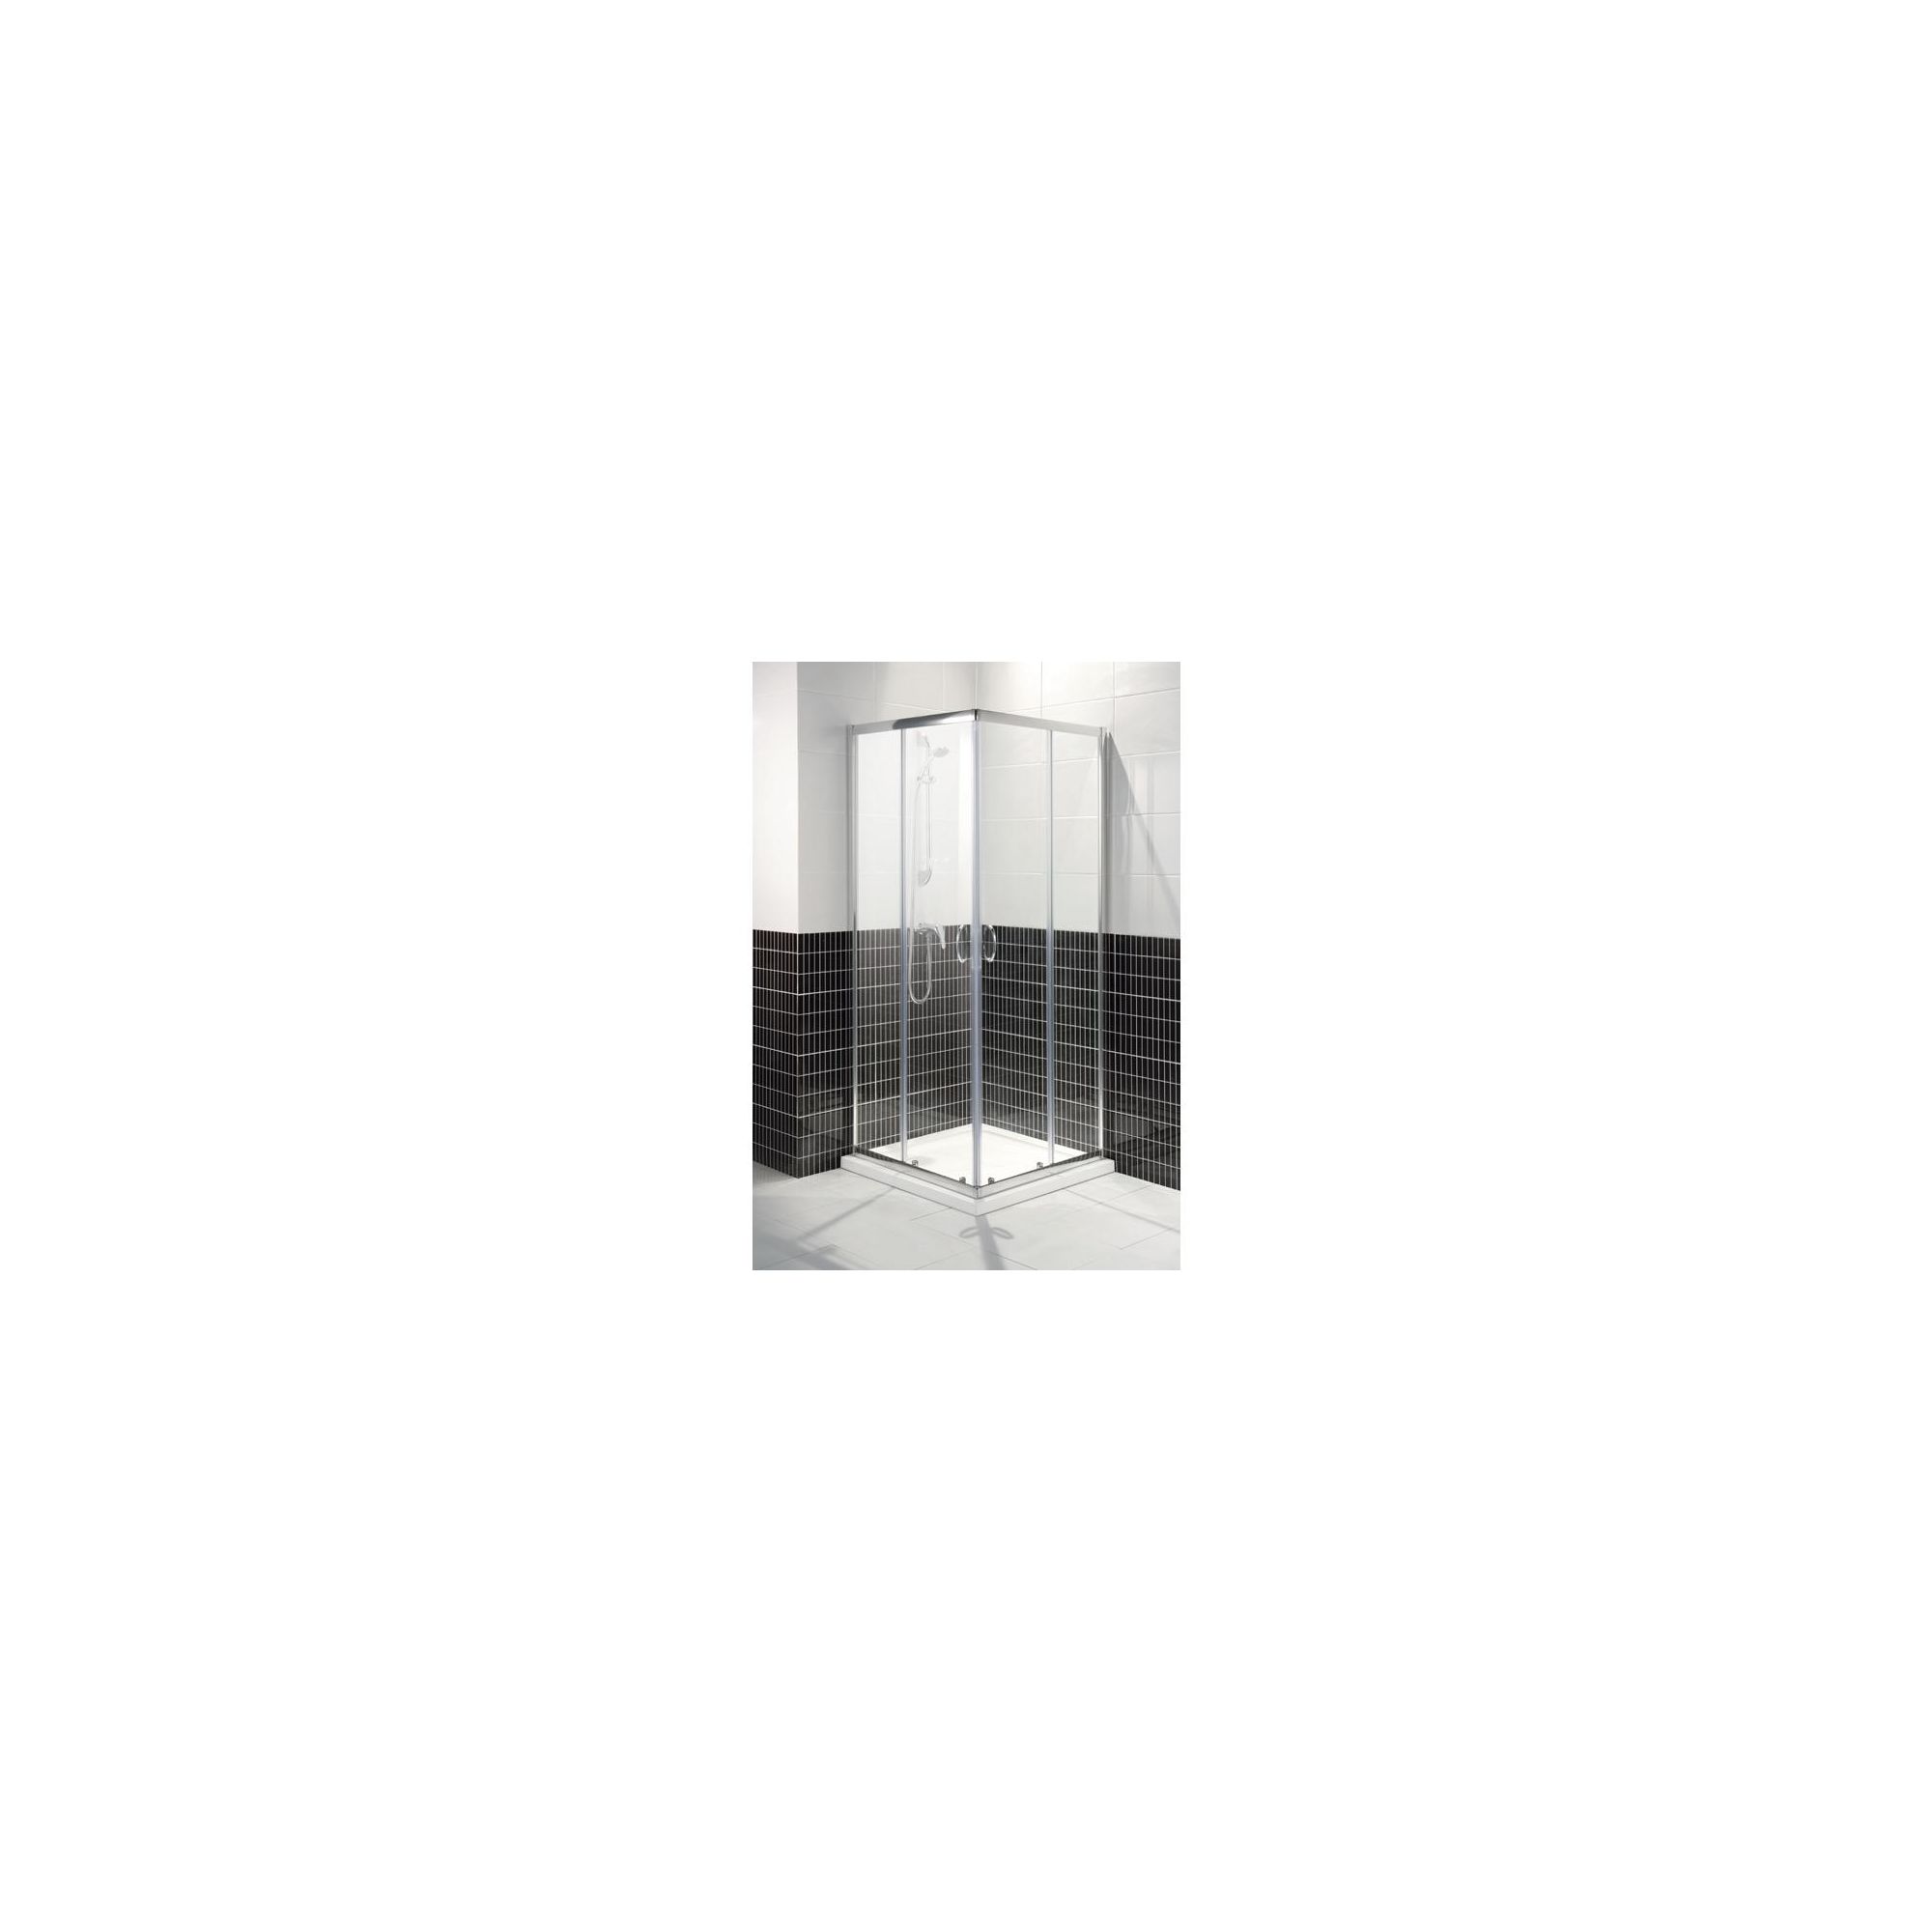 Balterley Framed Corner Entry Shower Enclosure, 760mm x 760mm, Standard Tray, 6mm glass at Tescos Direct